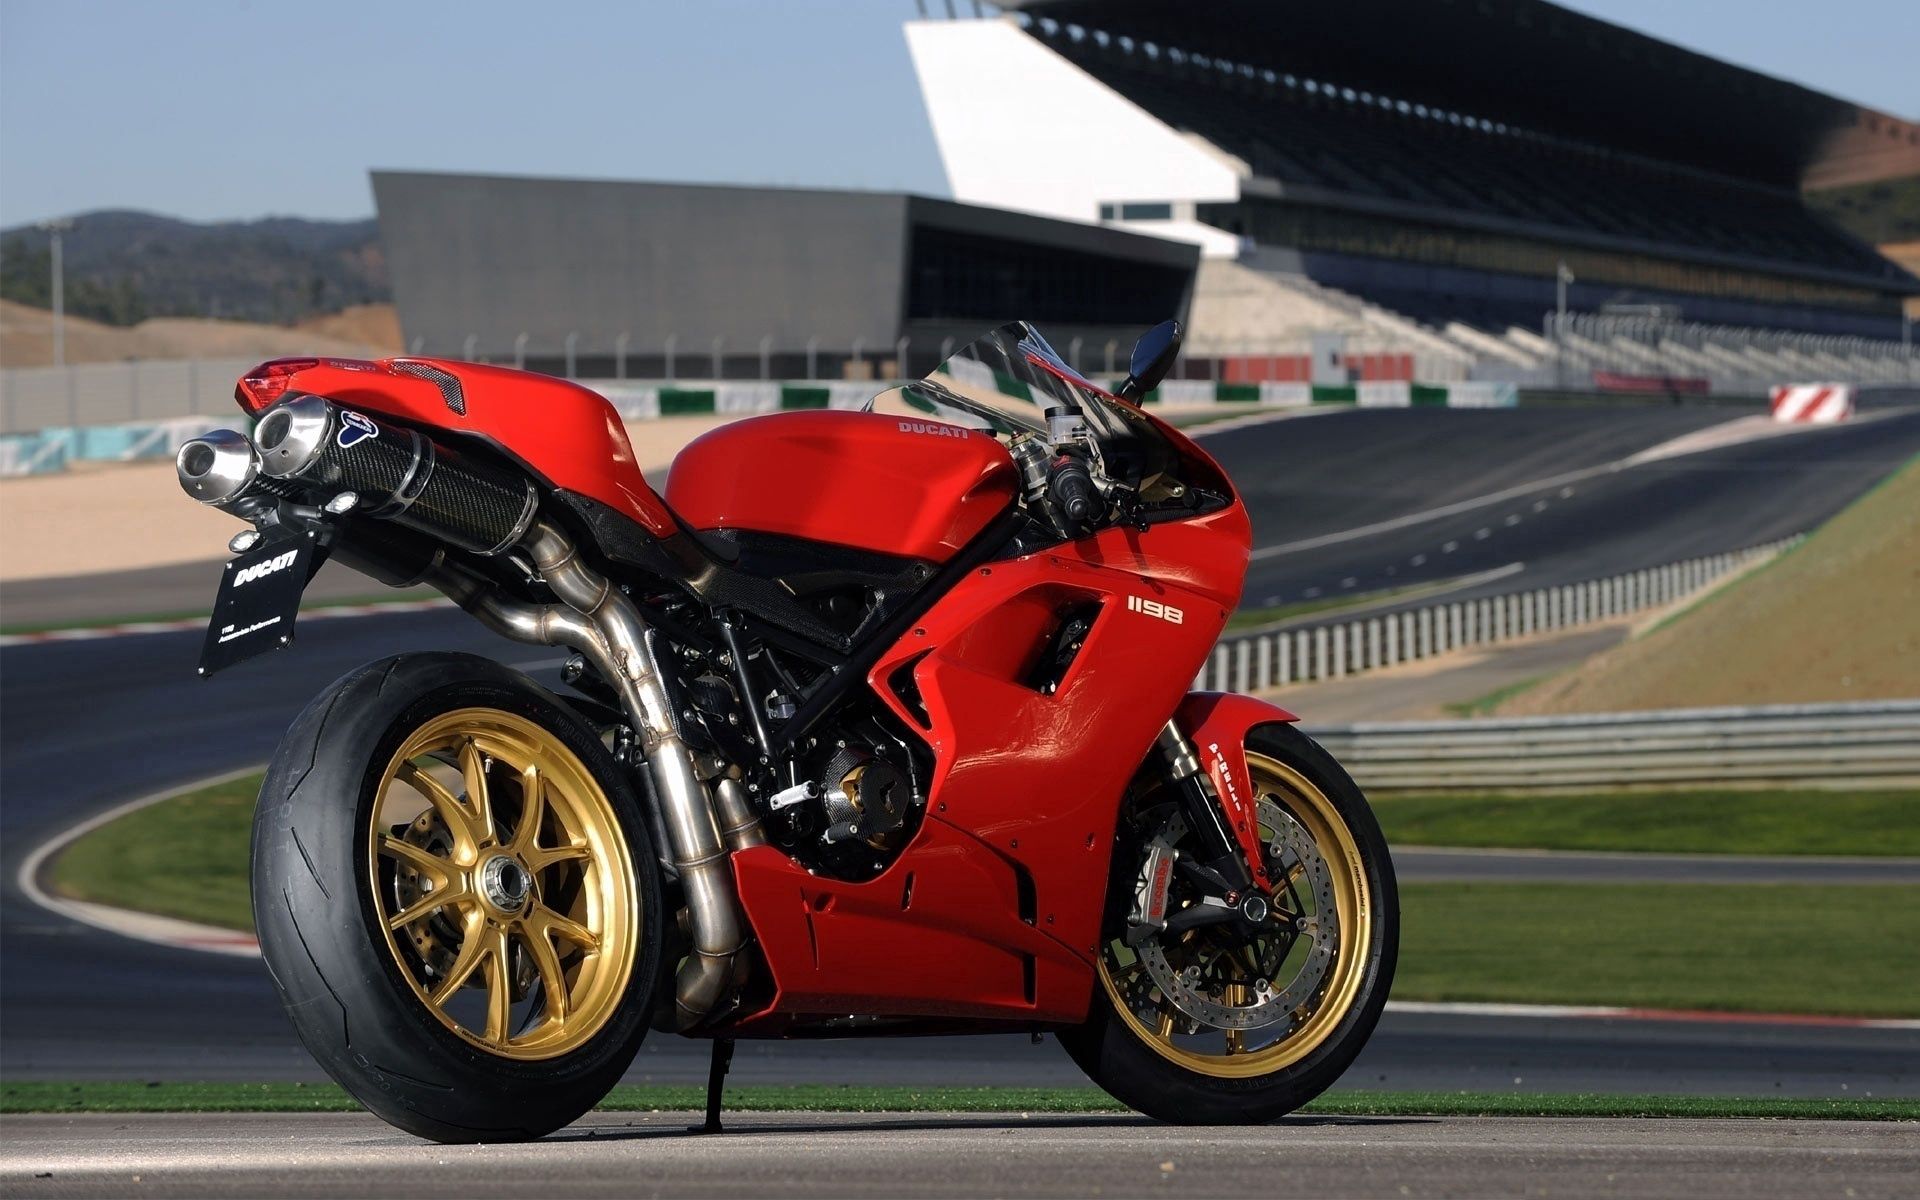 superbike, motorcycles, red, motorcycle, ducati 1098